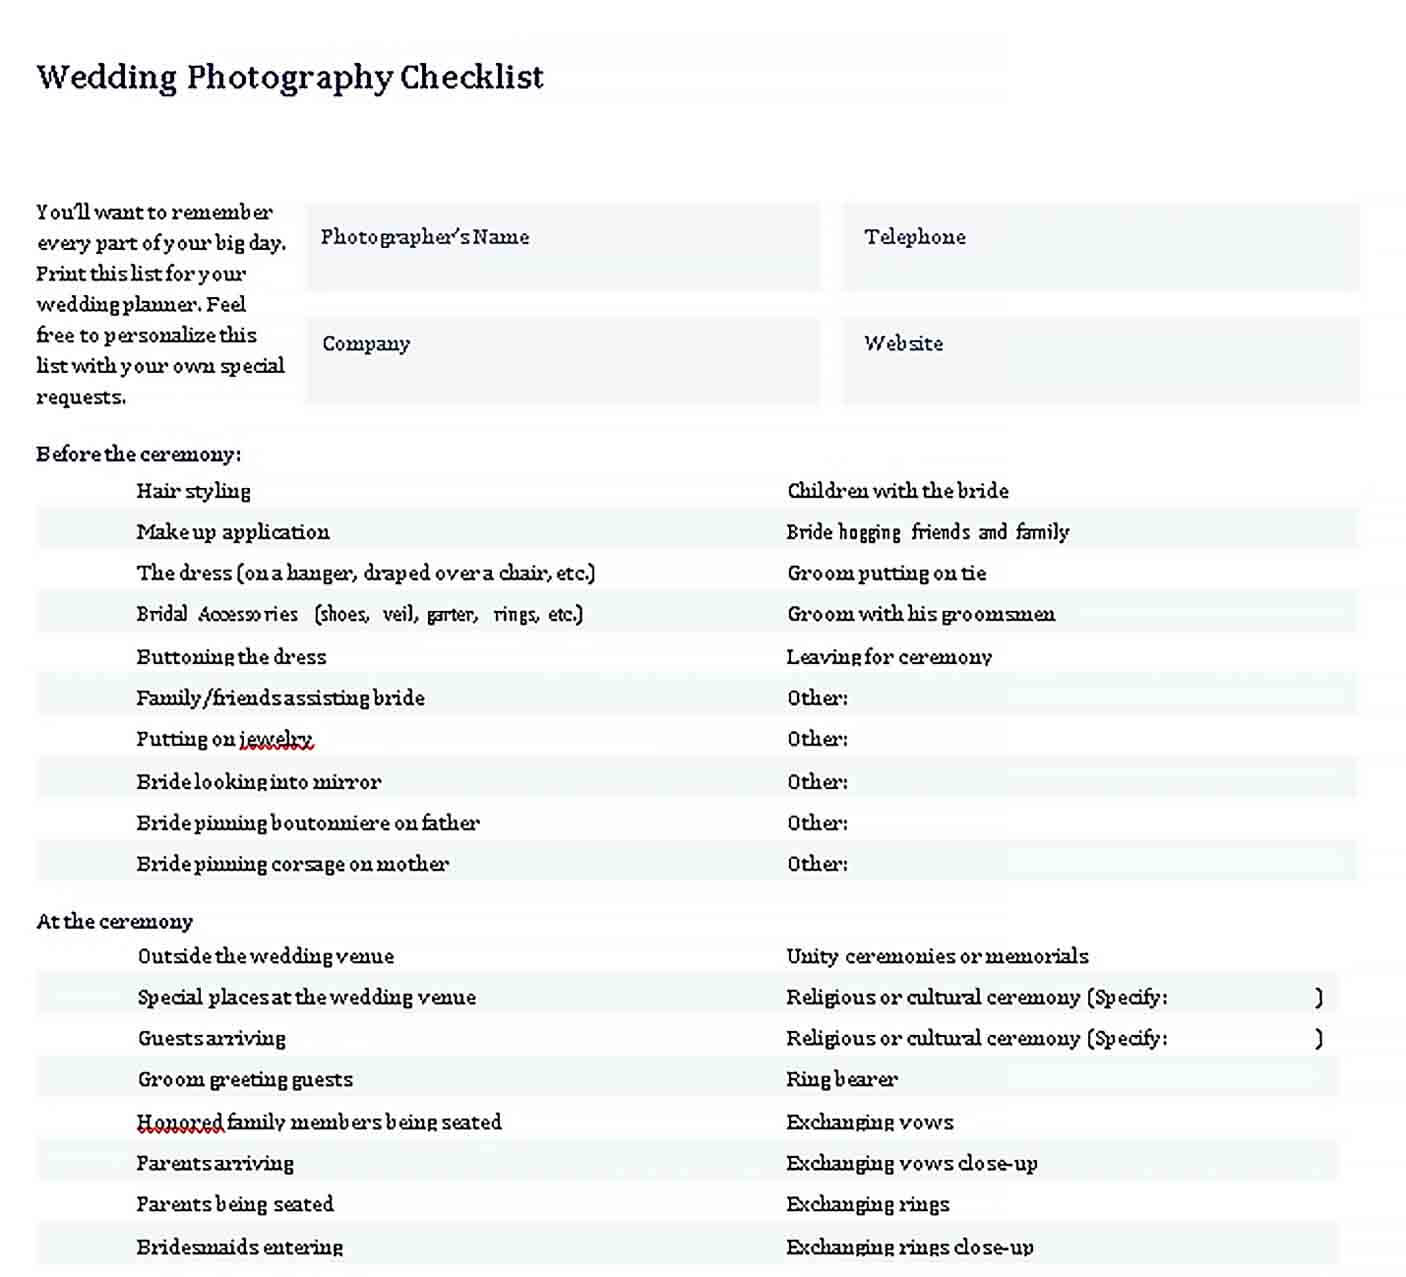 Sample Wedding Photographer Checklist